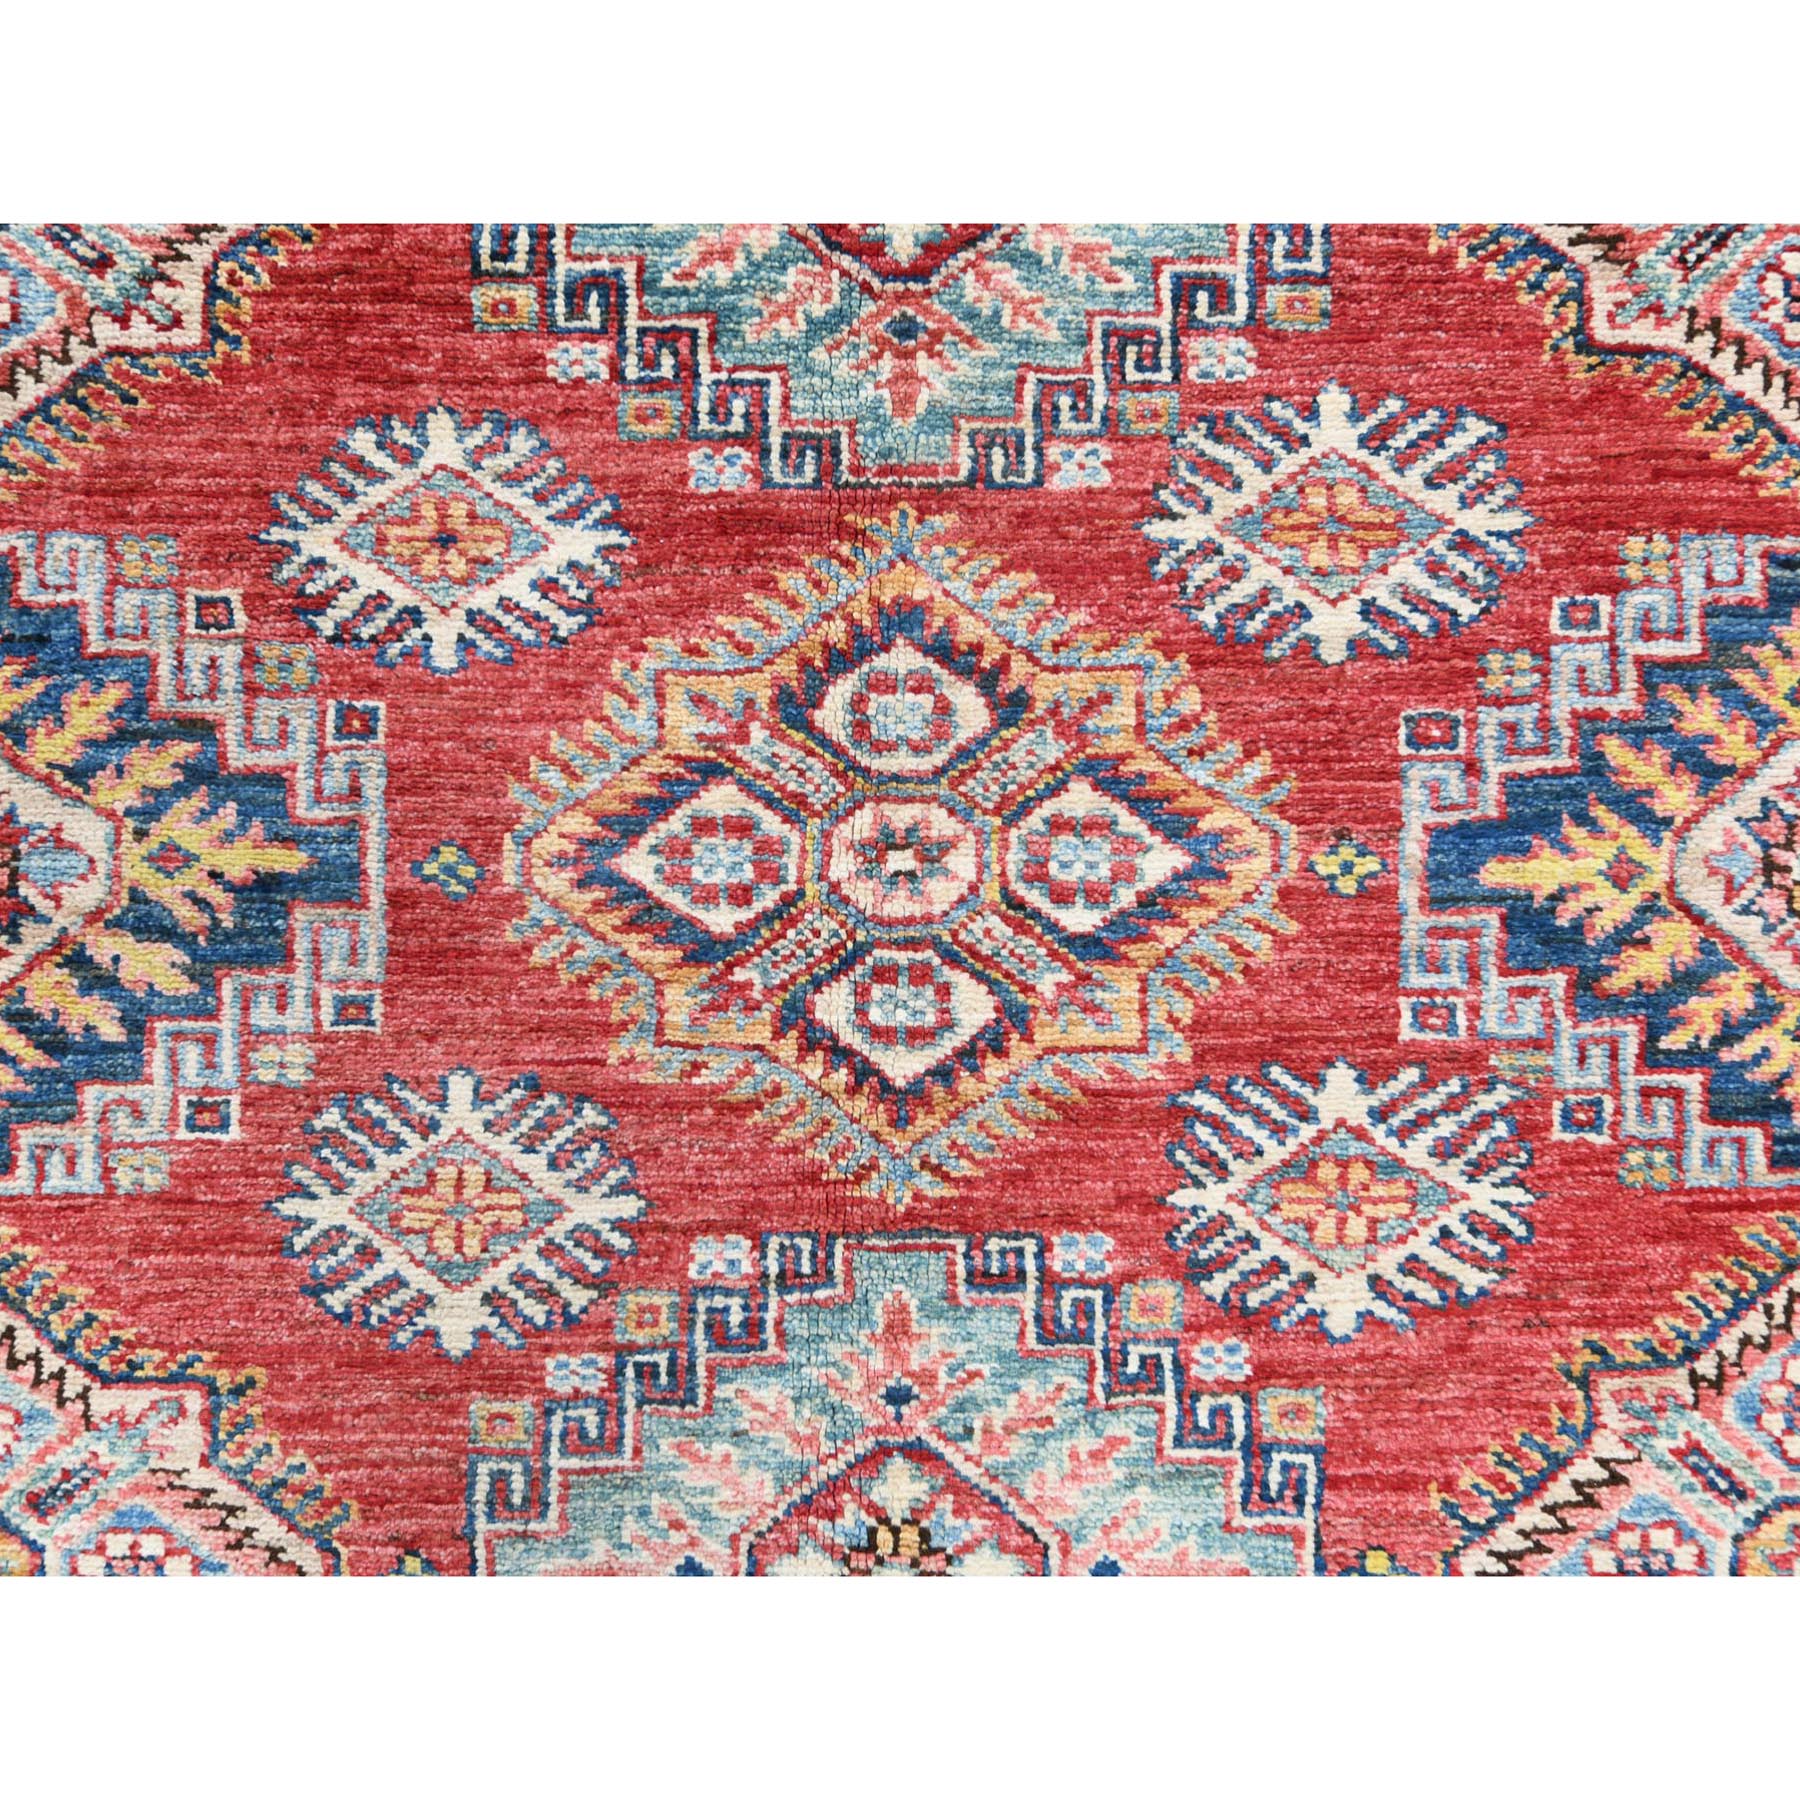 9'x12'2" Hand Woven Geometric Pattern Super Kazak Red Natural Wool Oriental Rug 